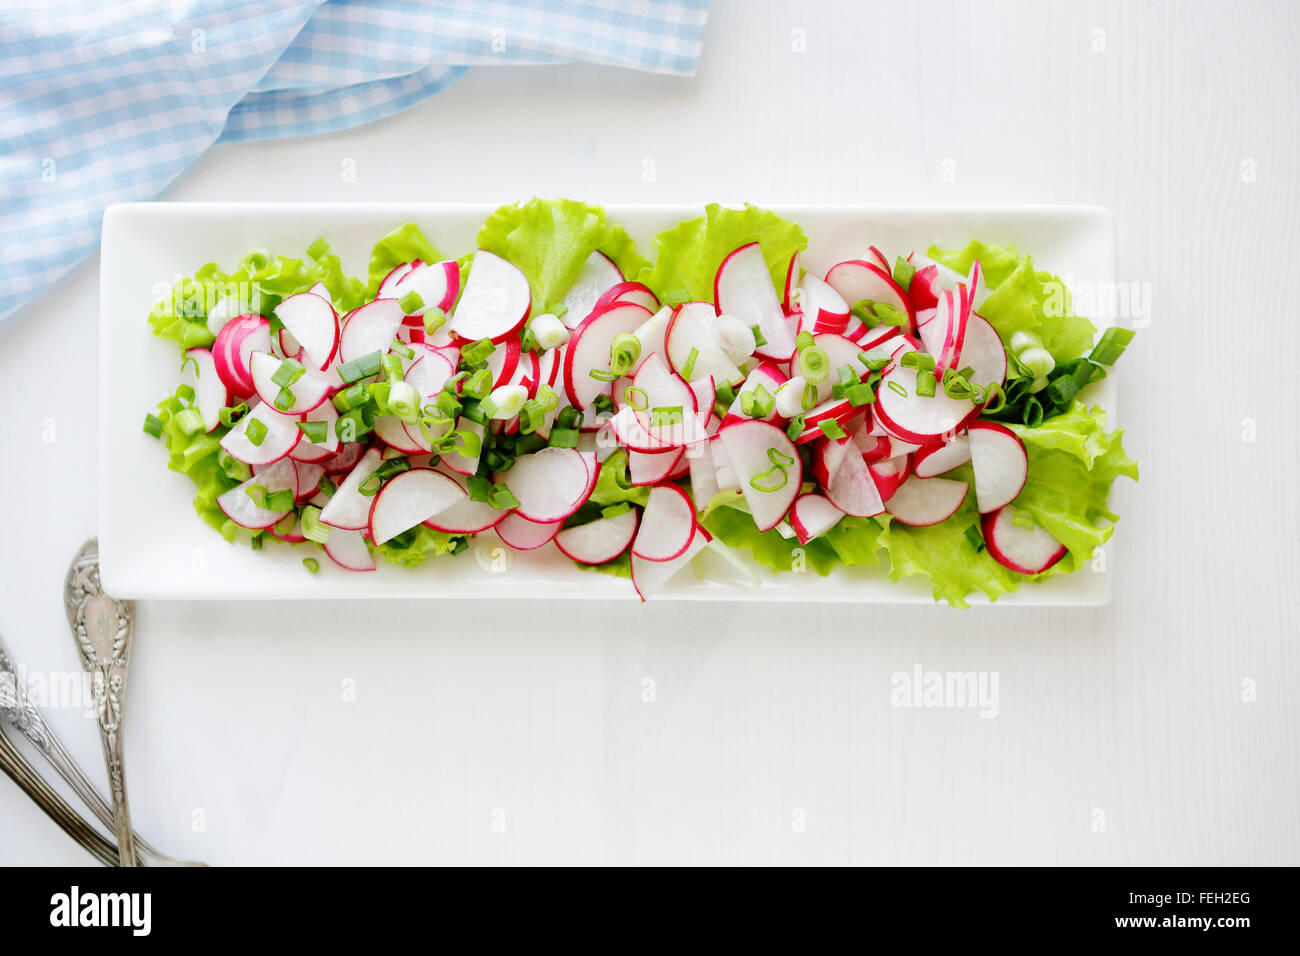 Frühlingssalat mit Rettich, Lebensmittel-Draufsicht Stockfoto